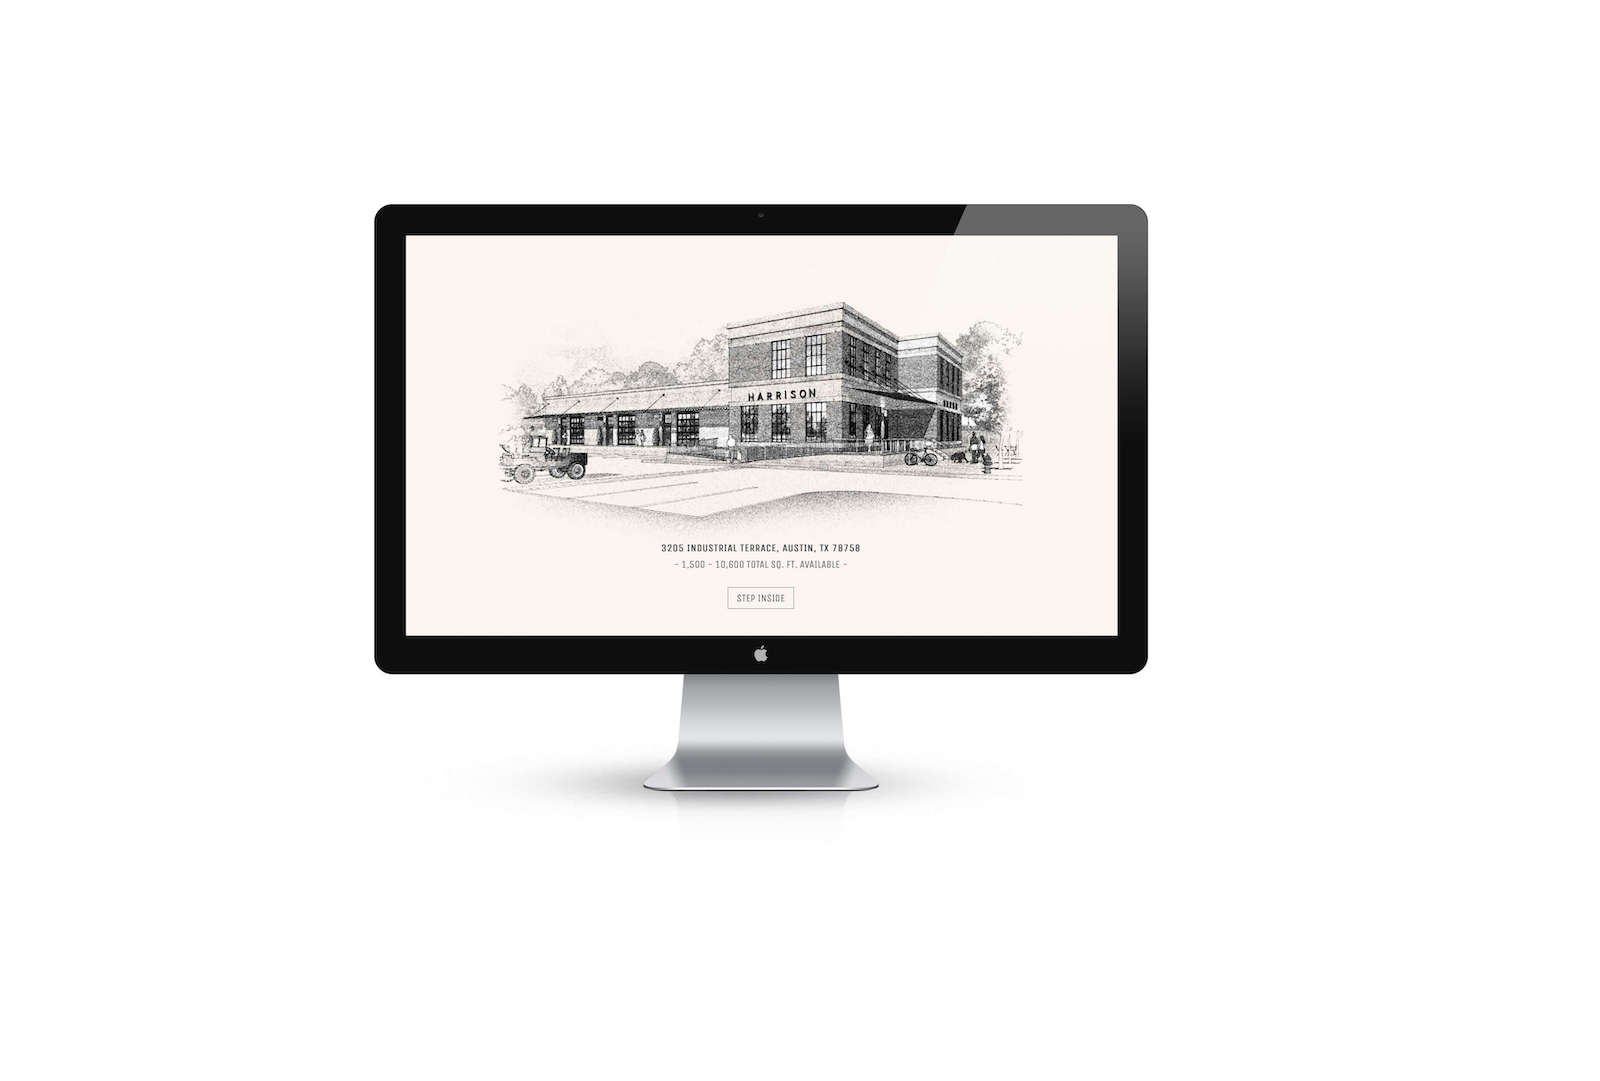 Harrison Industrial Park Website Design